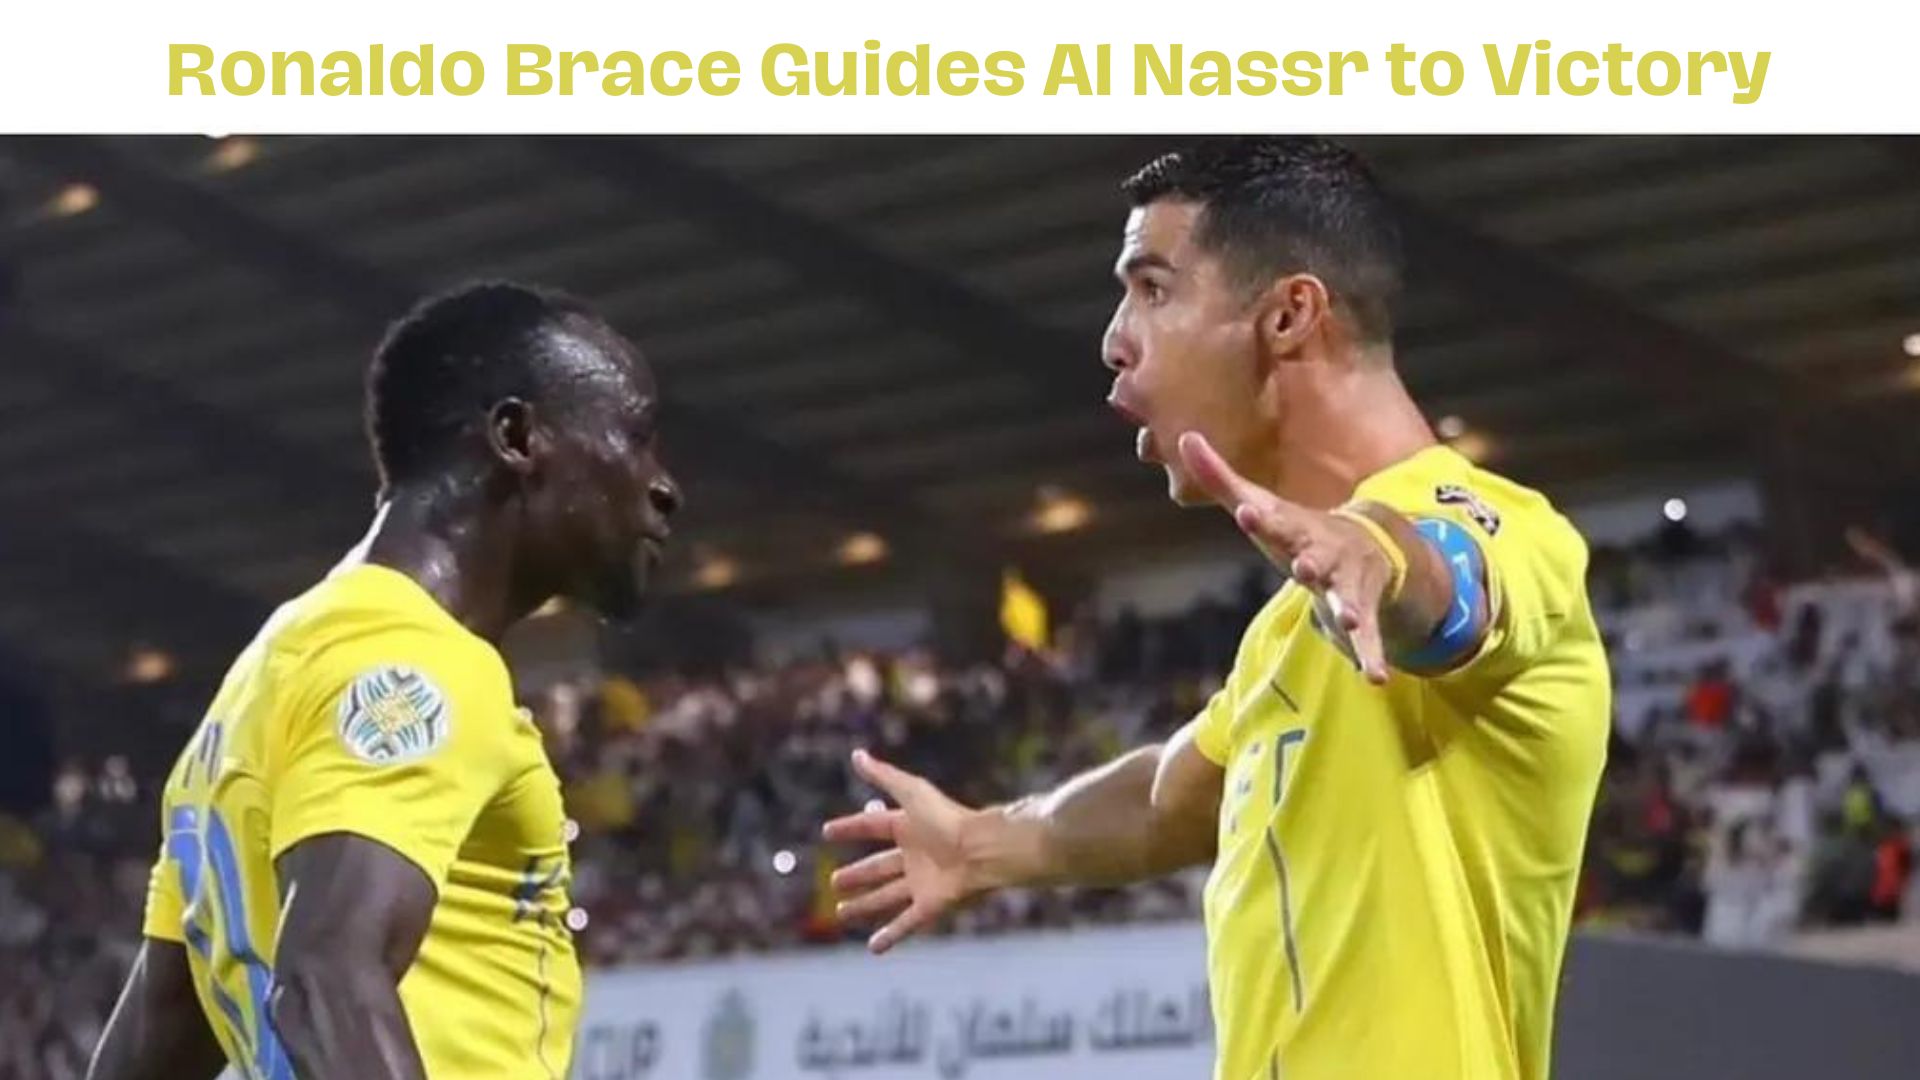 Ronaldo Brace Guides Al Nassr to Victory